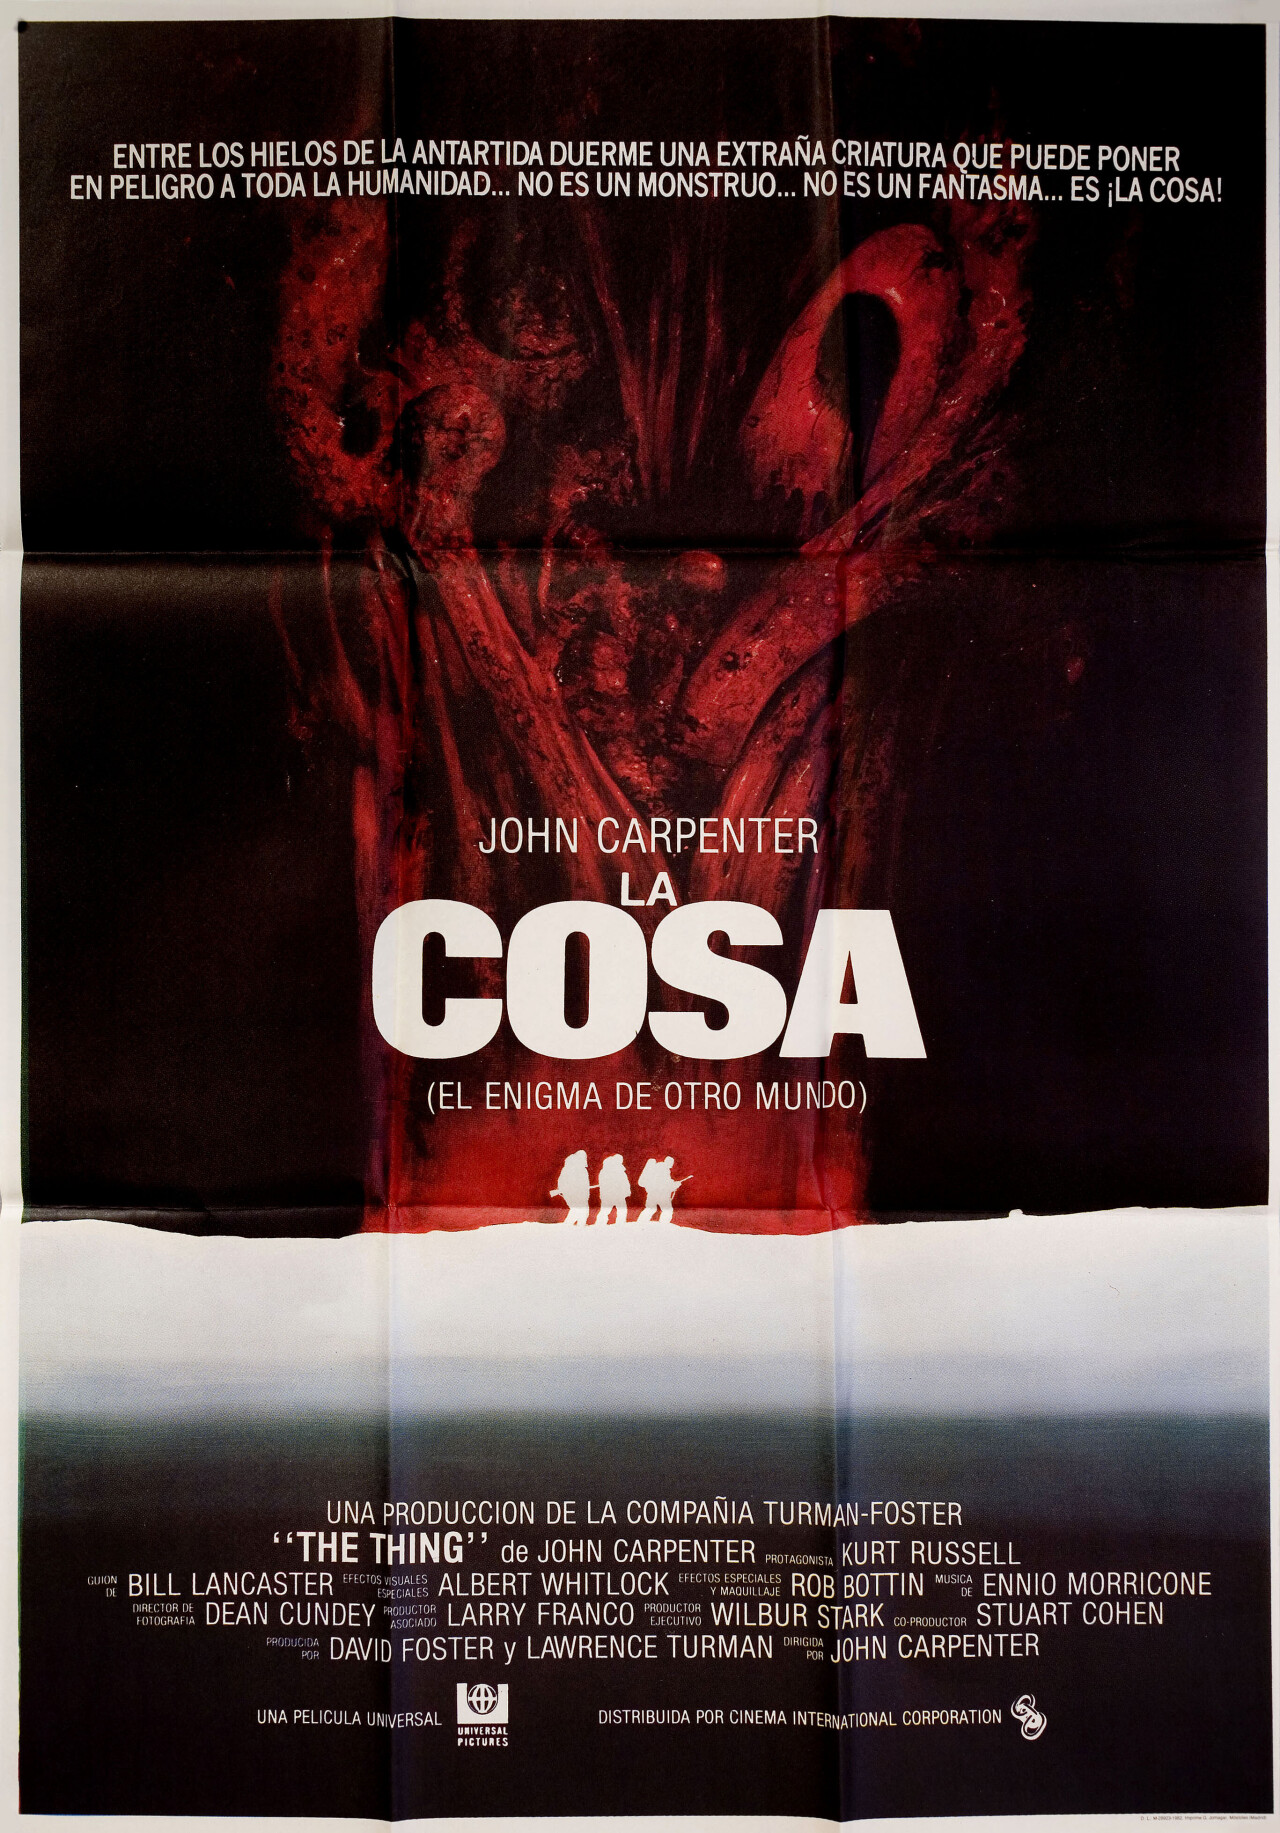 Нечто (The Thing, 1982), режиссёр Джон Карпентер, испанский постер к фильму (ужасы, 1982 год)